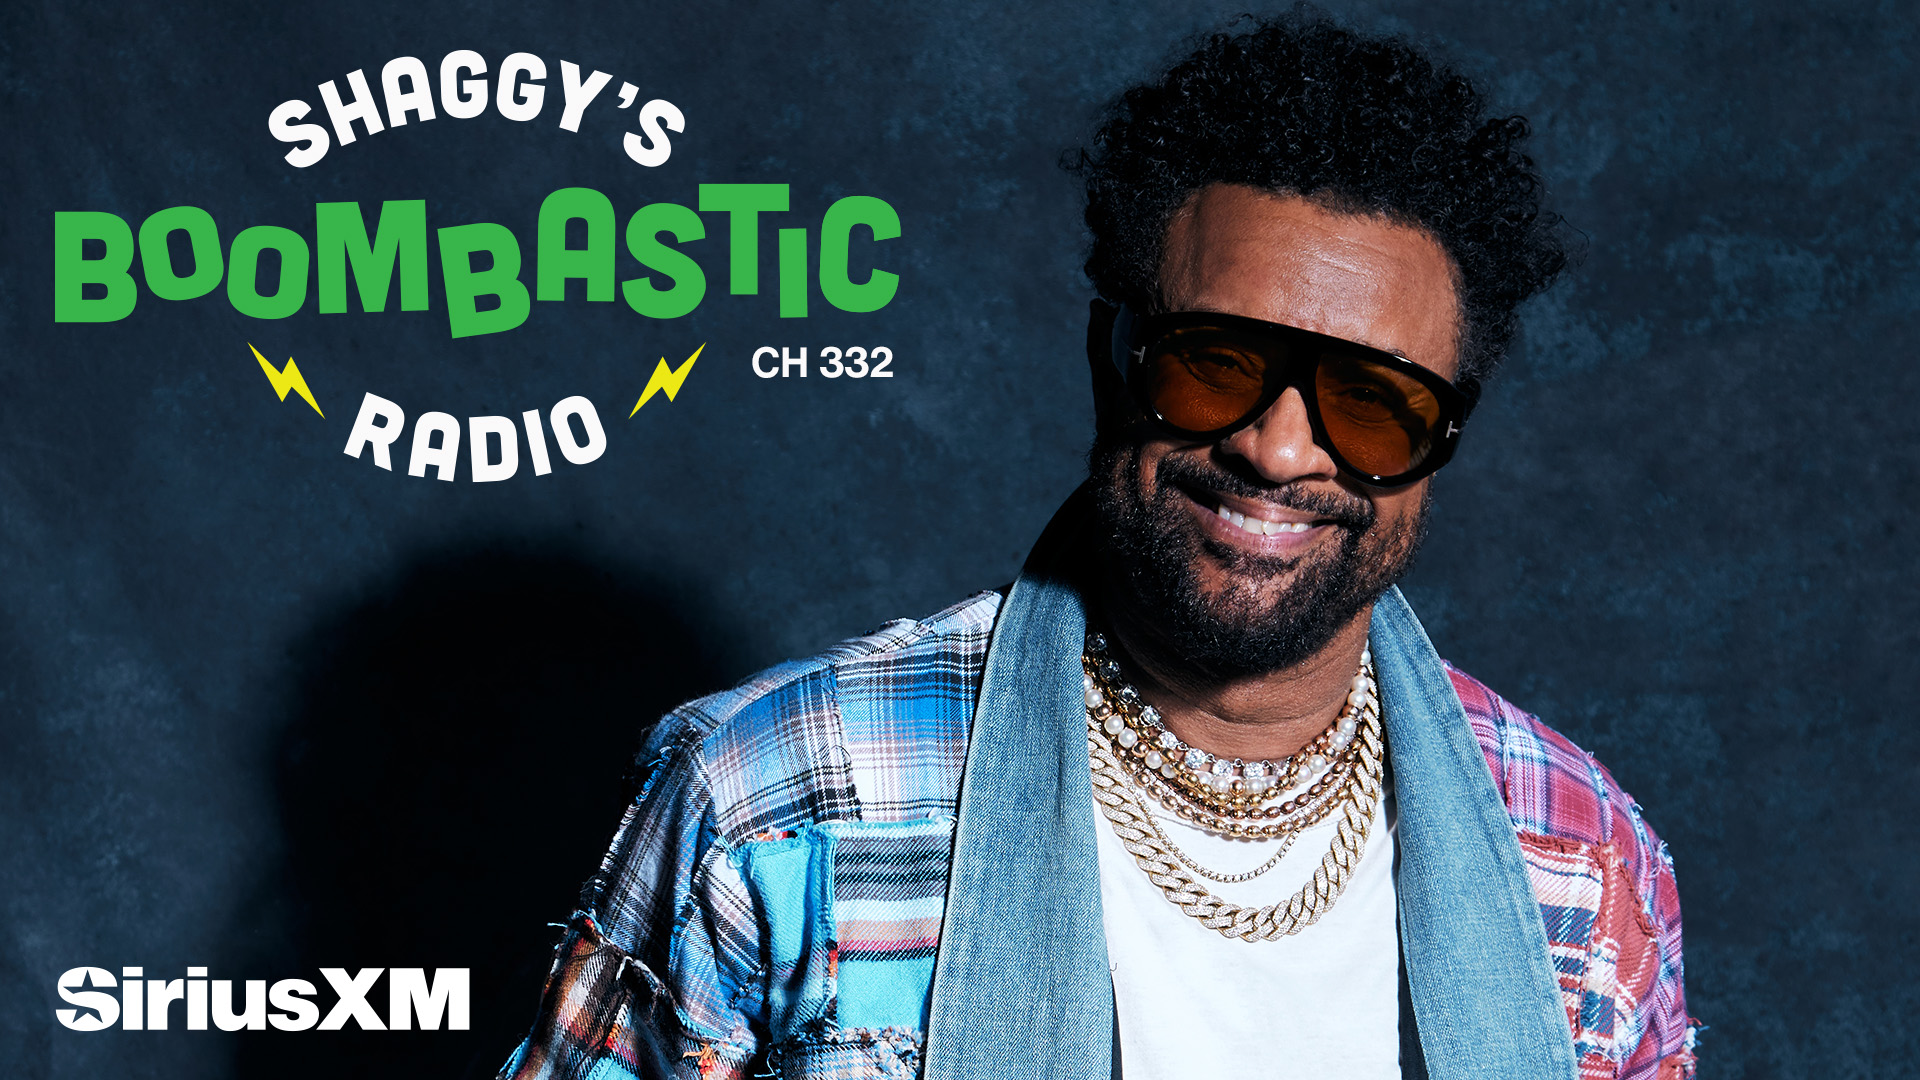 Shaggy's Boombastic Radio on SiriusXM